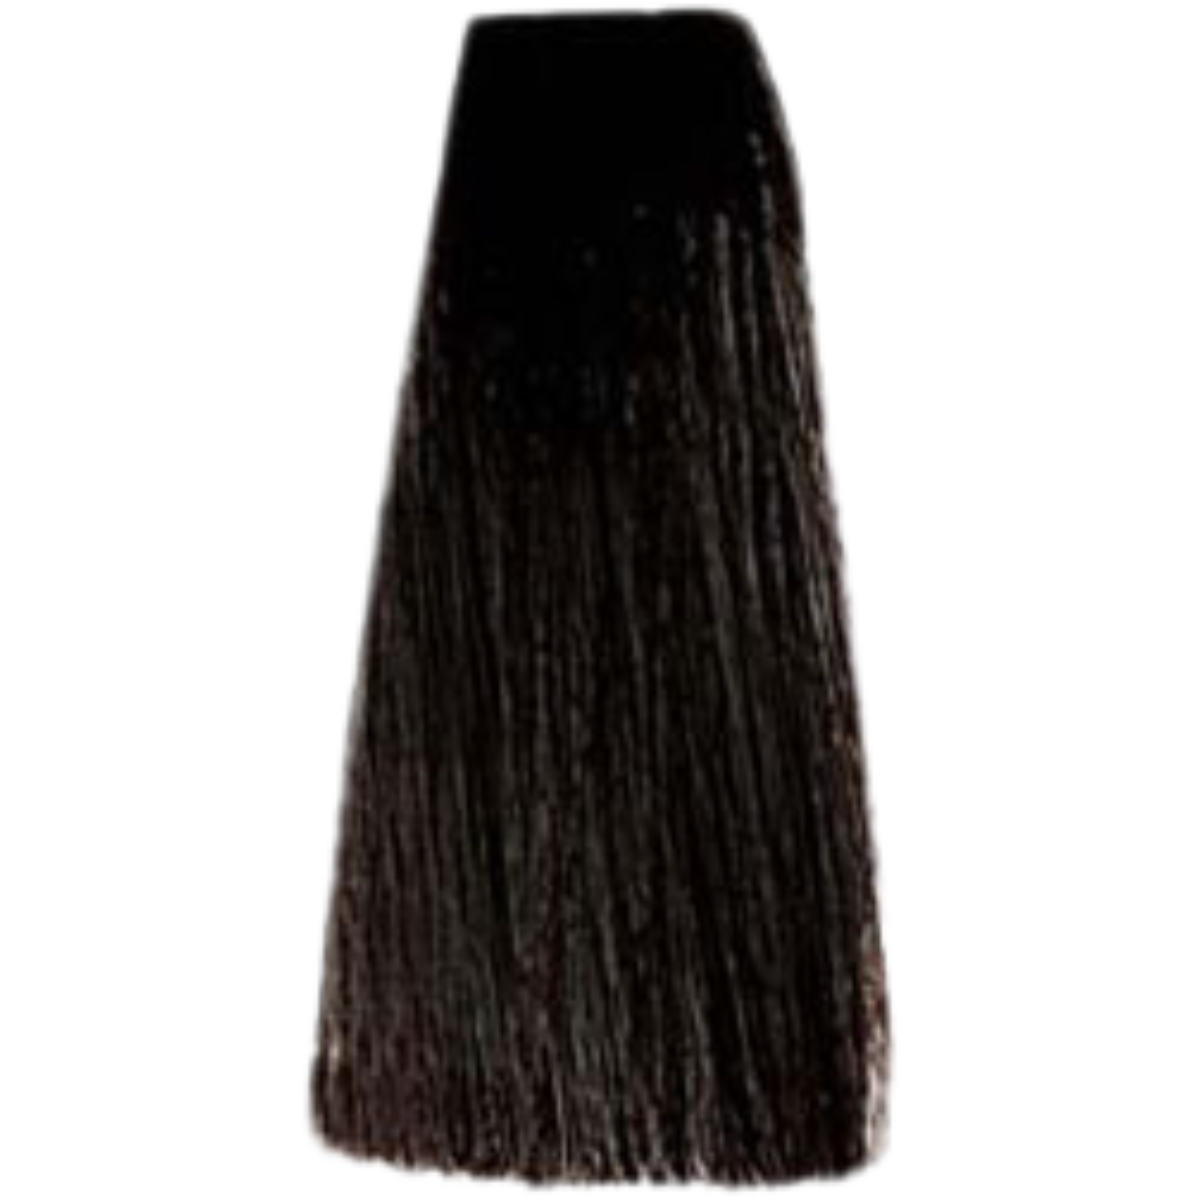 צבע שיער בסיס NATURALS DARK BROWN 3.0 פארמויטה FarmaVita צבע לשיער 100 גרם